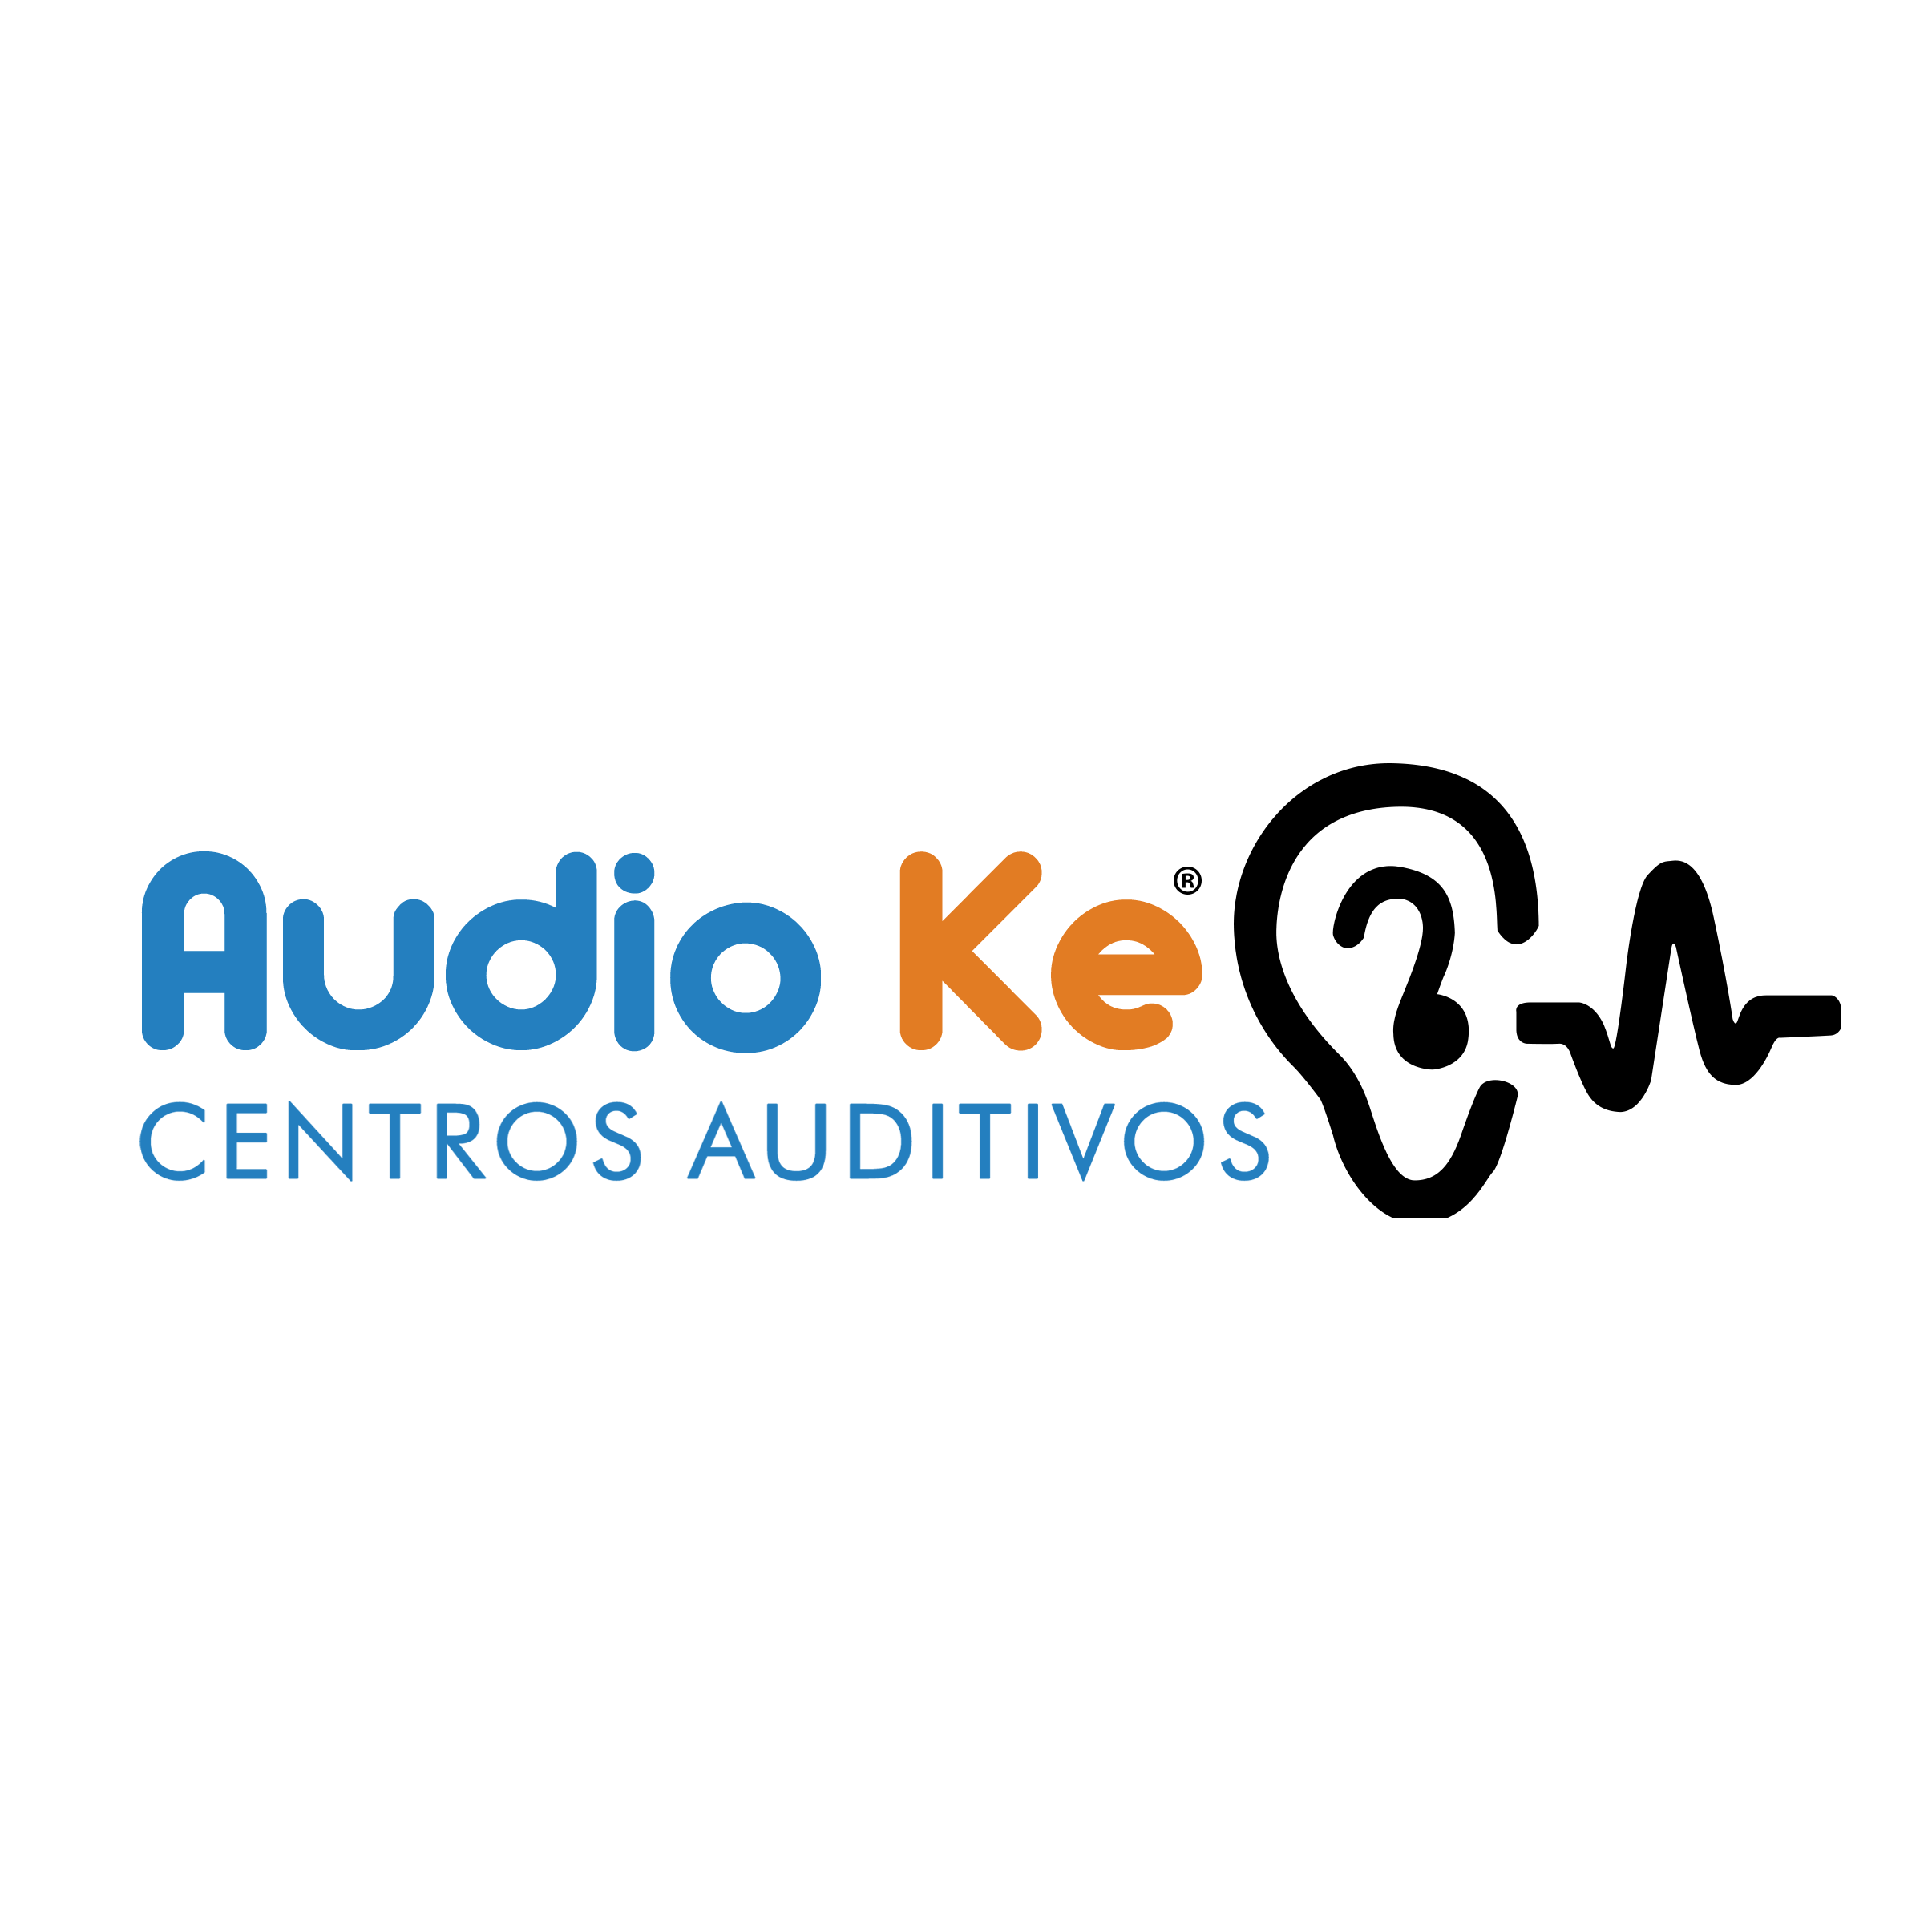 AUDIOKE  Centros Auditivos  "el placer de volver a oír" Logo